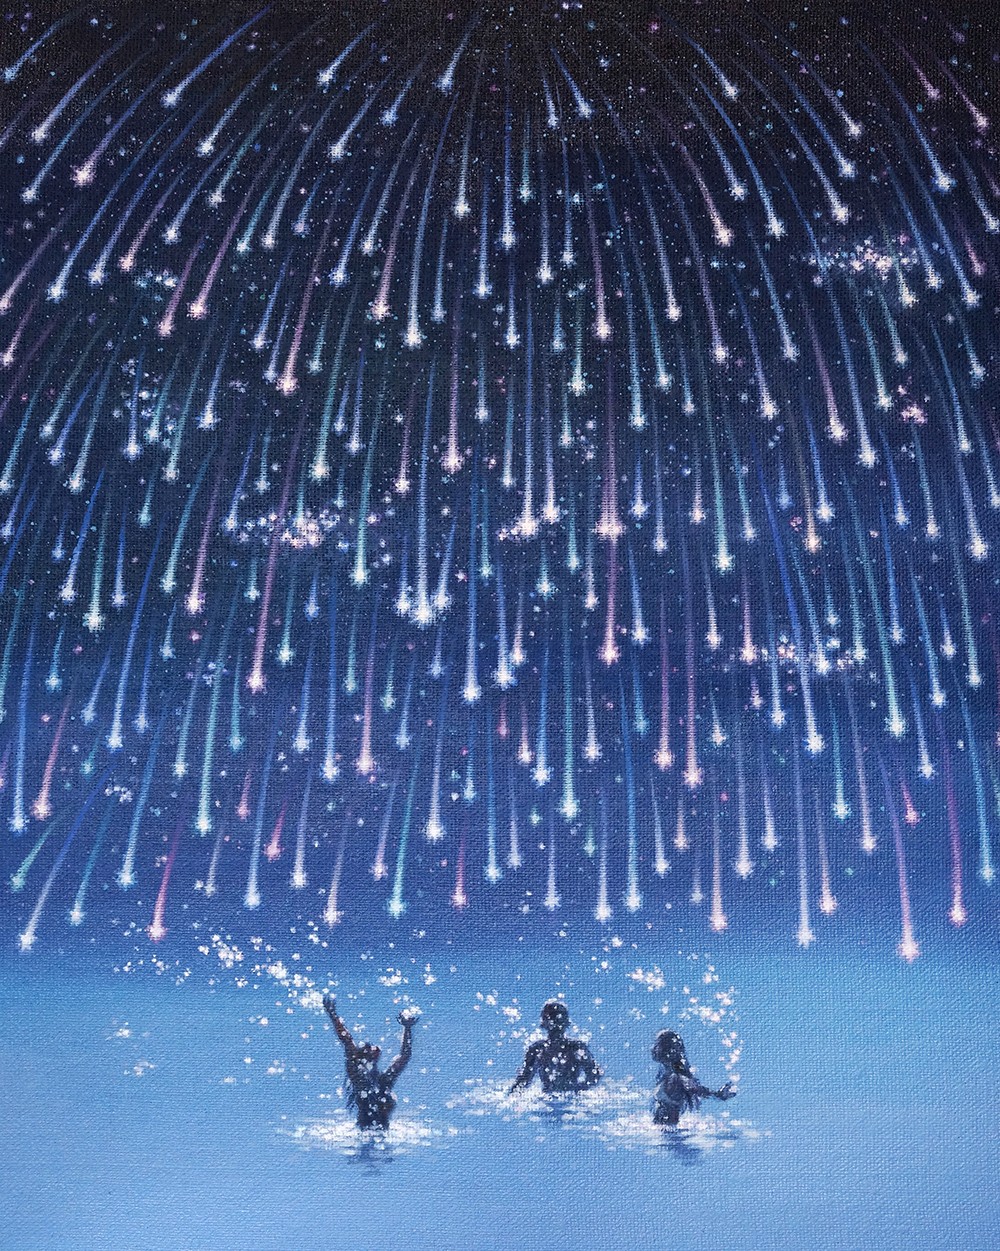 Starry night_100×80cm_oil on linen_2017